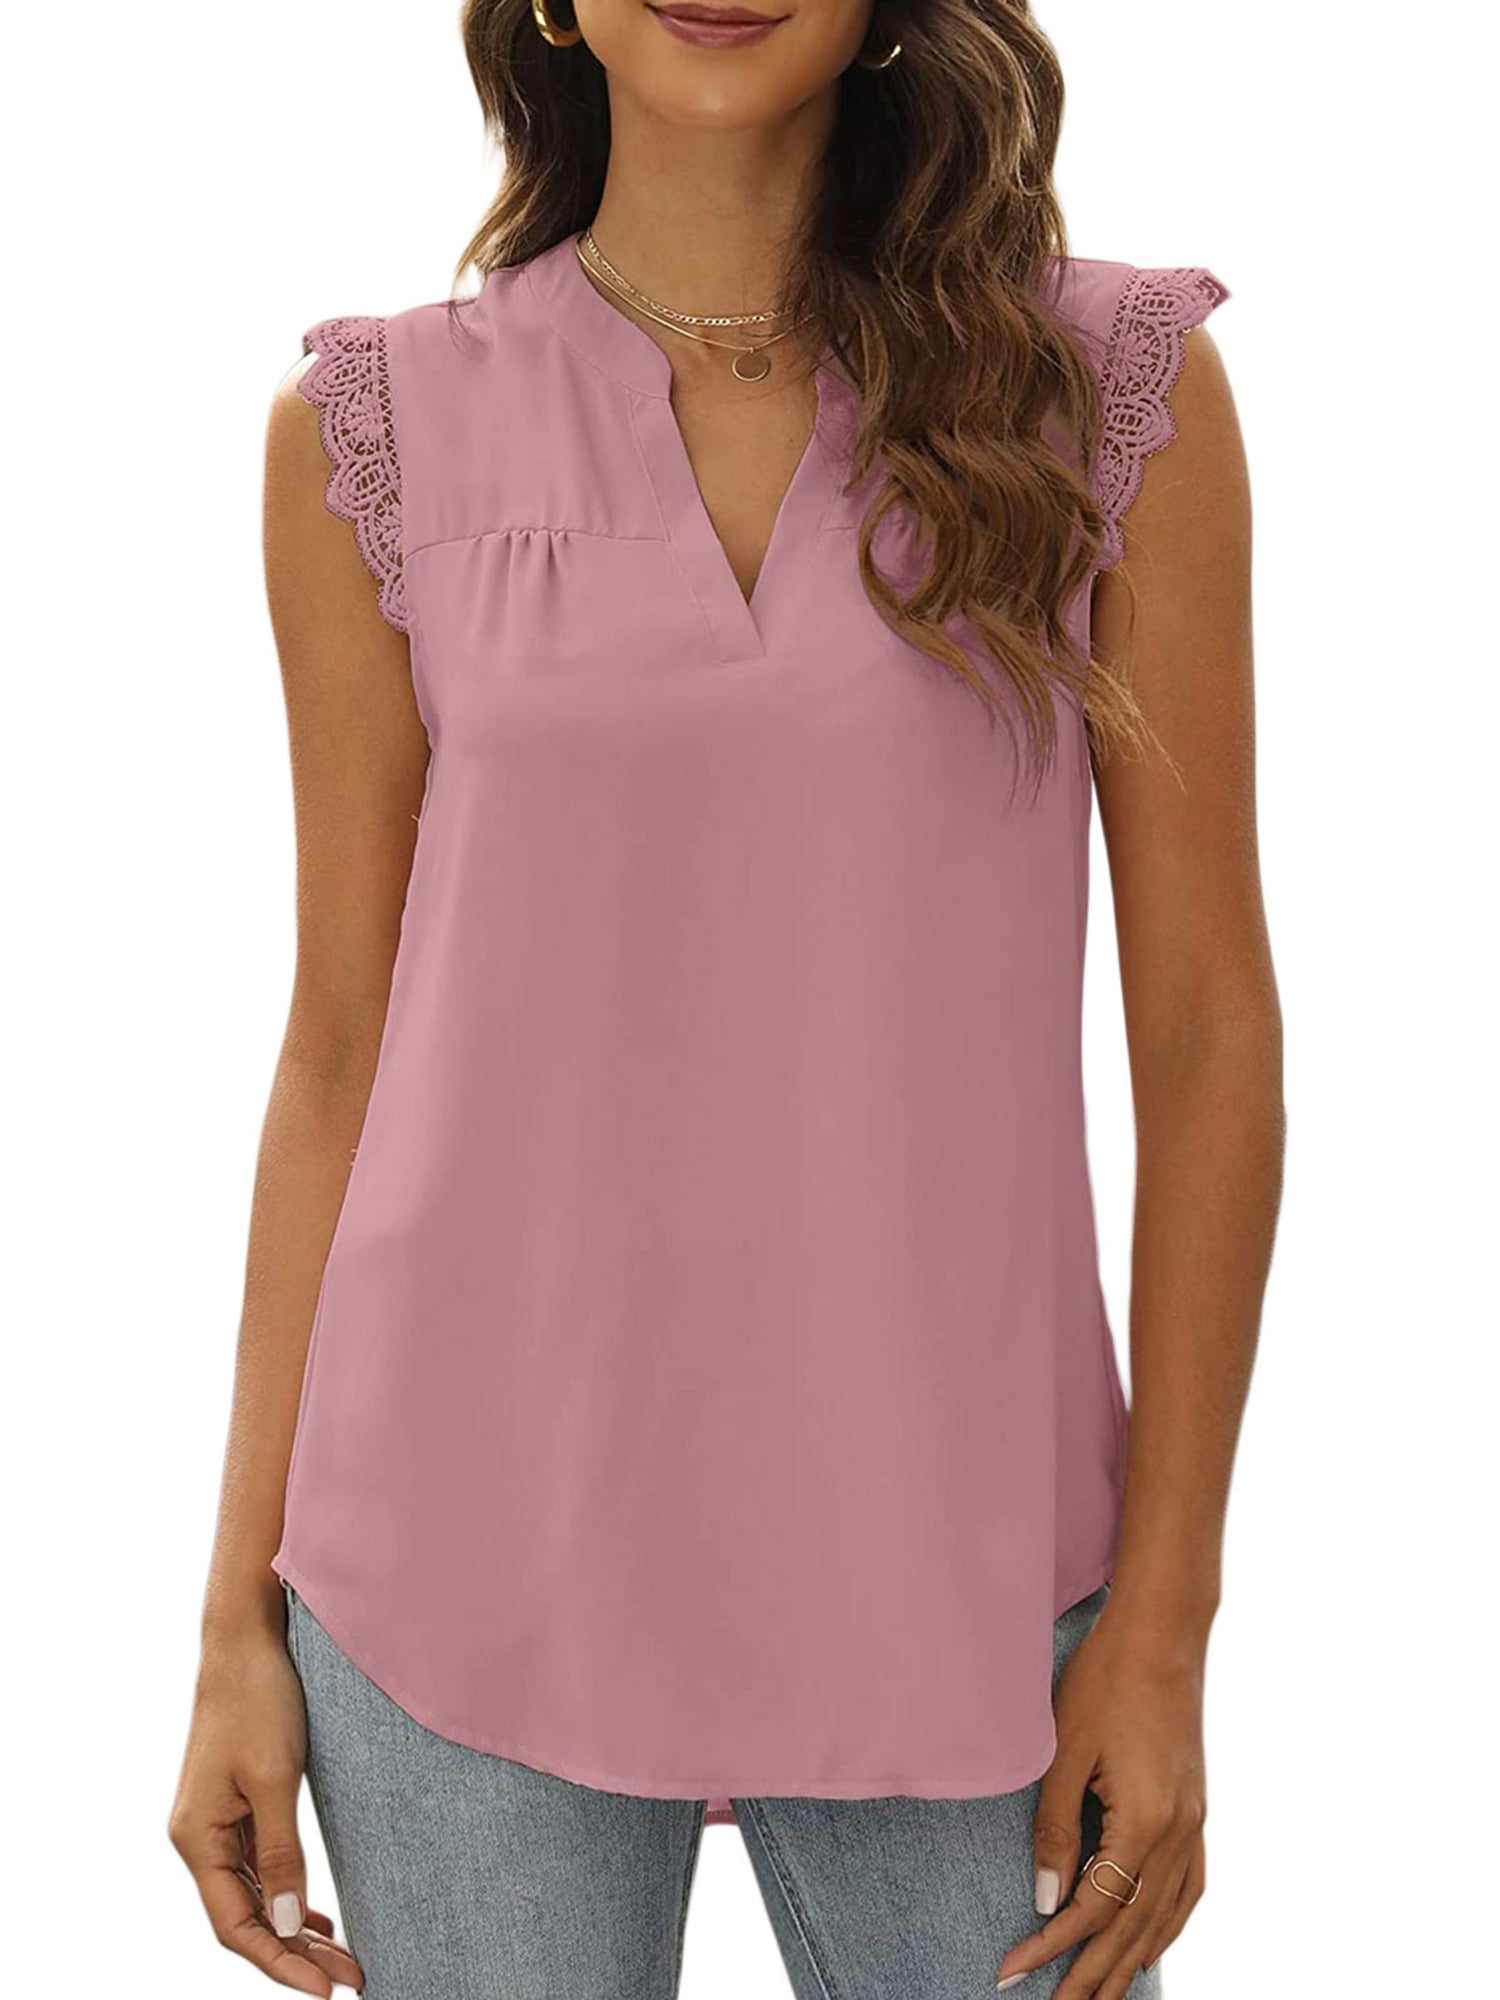 Women's Chiffon Lace Vest Tops Sleeveless Casual Tank Blouse Summer Tops T-Shirt